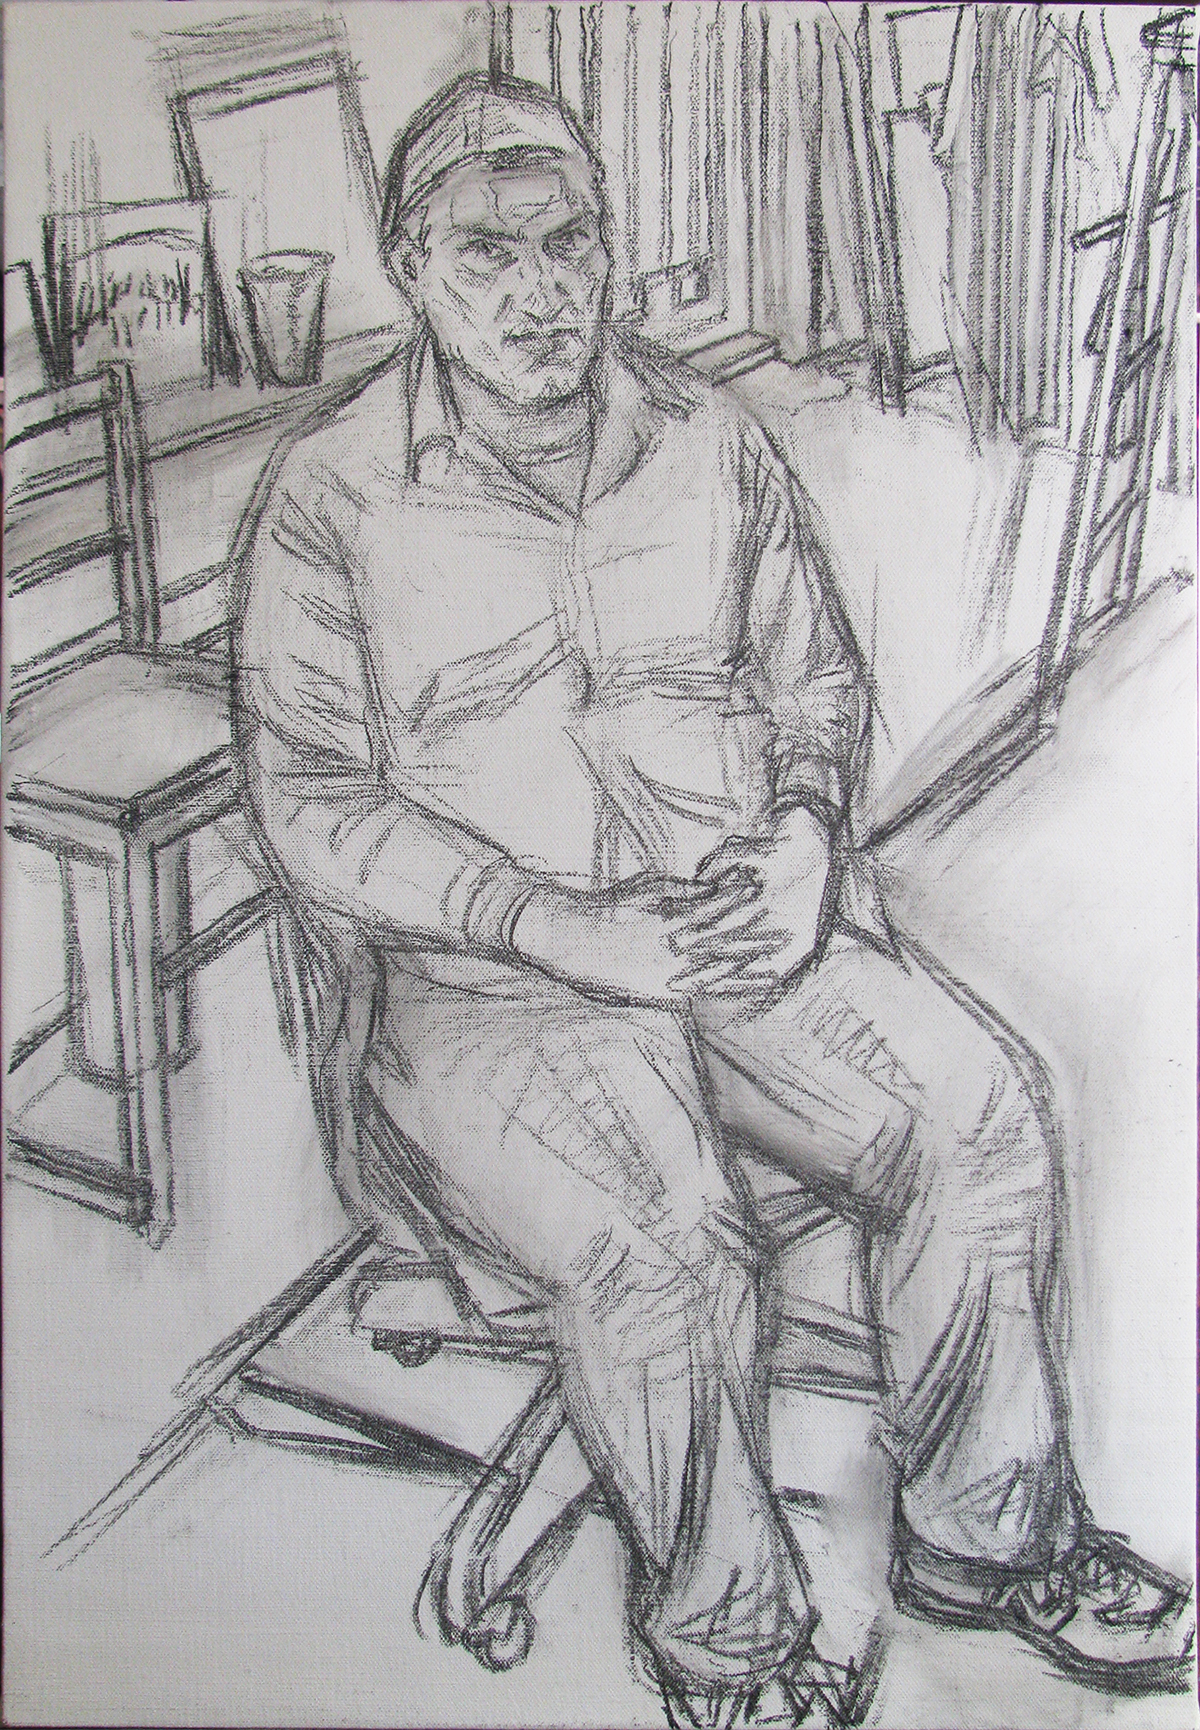  JOE BRADLEY (drawing) charcoal on linen 22 x 33” 2015 